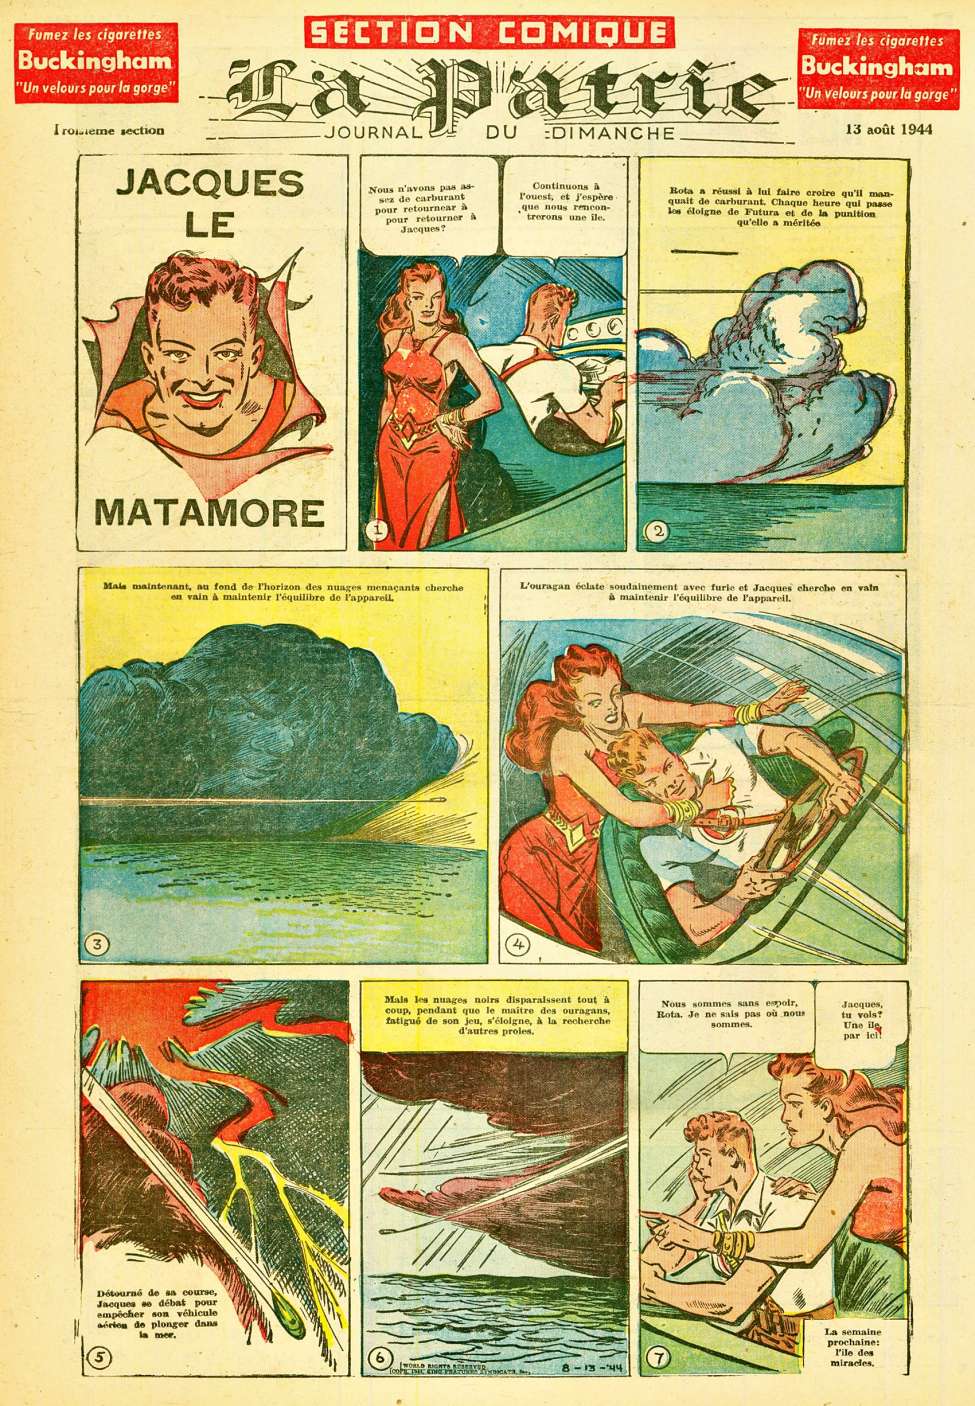 Comic Book Cover For La Patrie - Section Comique (1944-08-13)